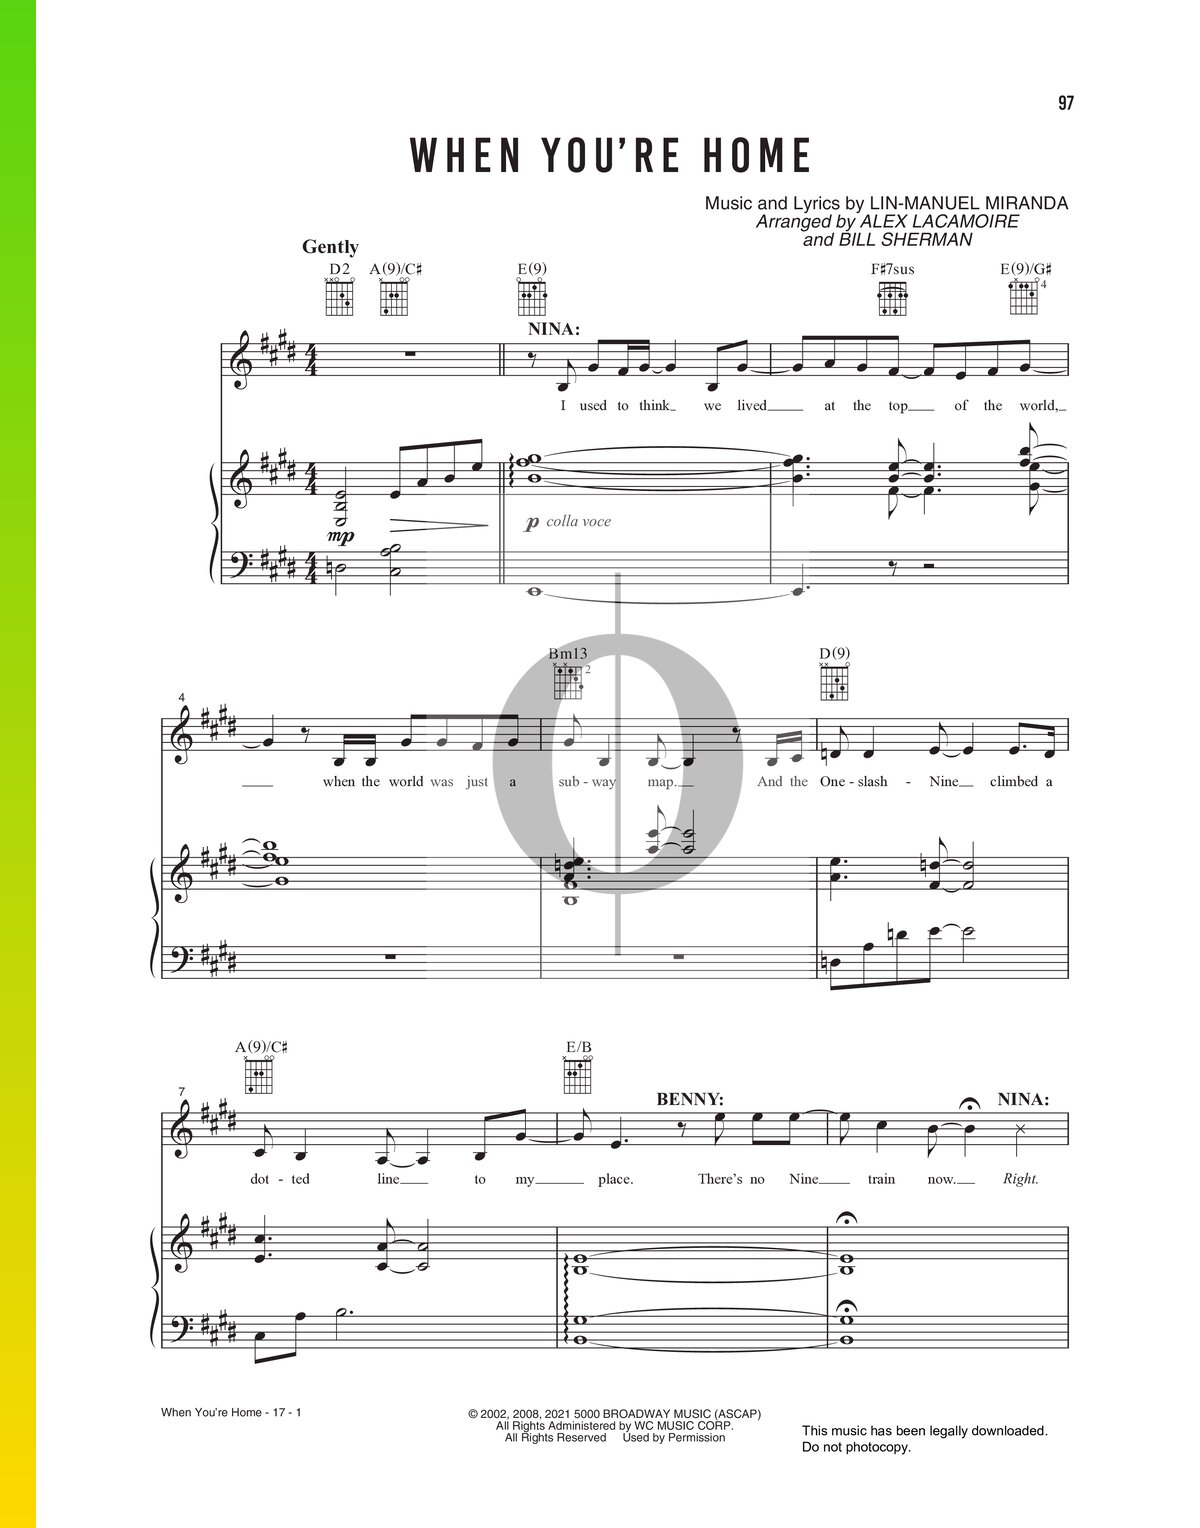 Free Jingle Bells sheet music for piano solo - High-Quality (PDF)